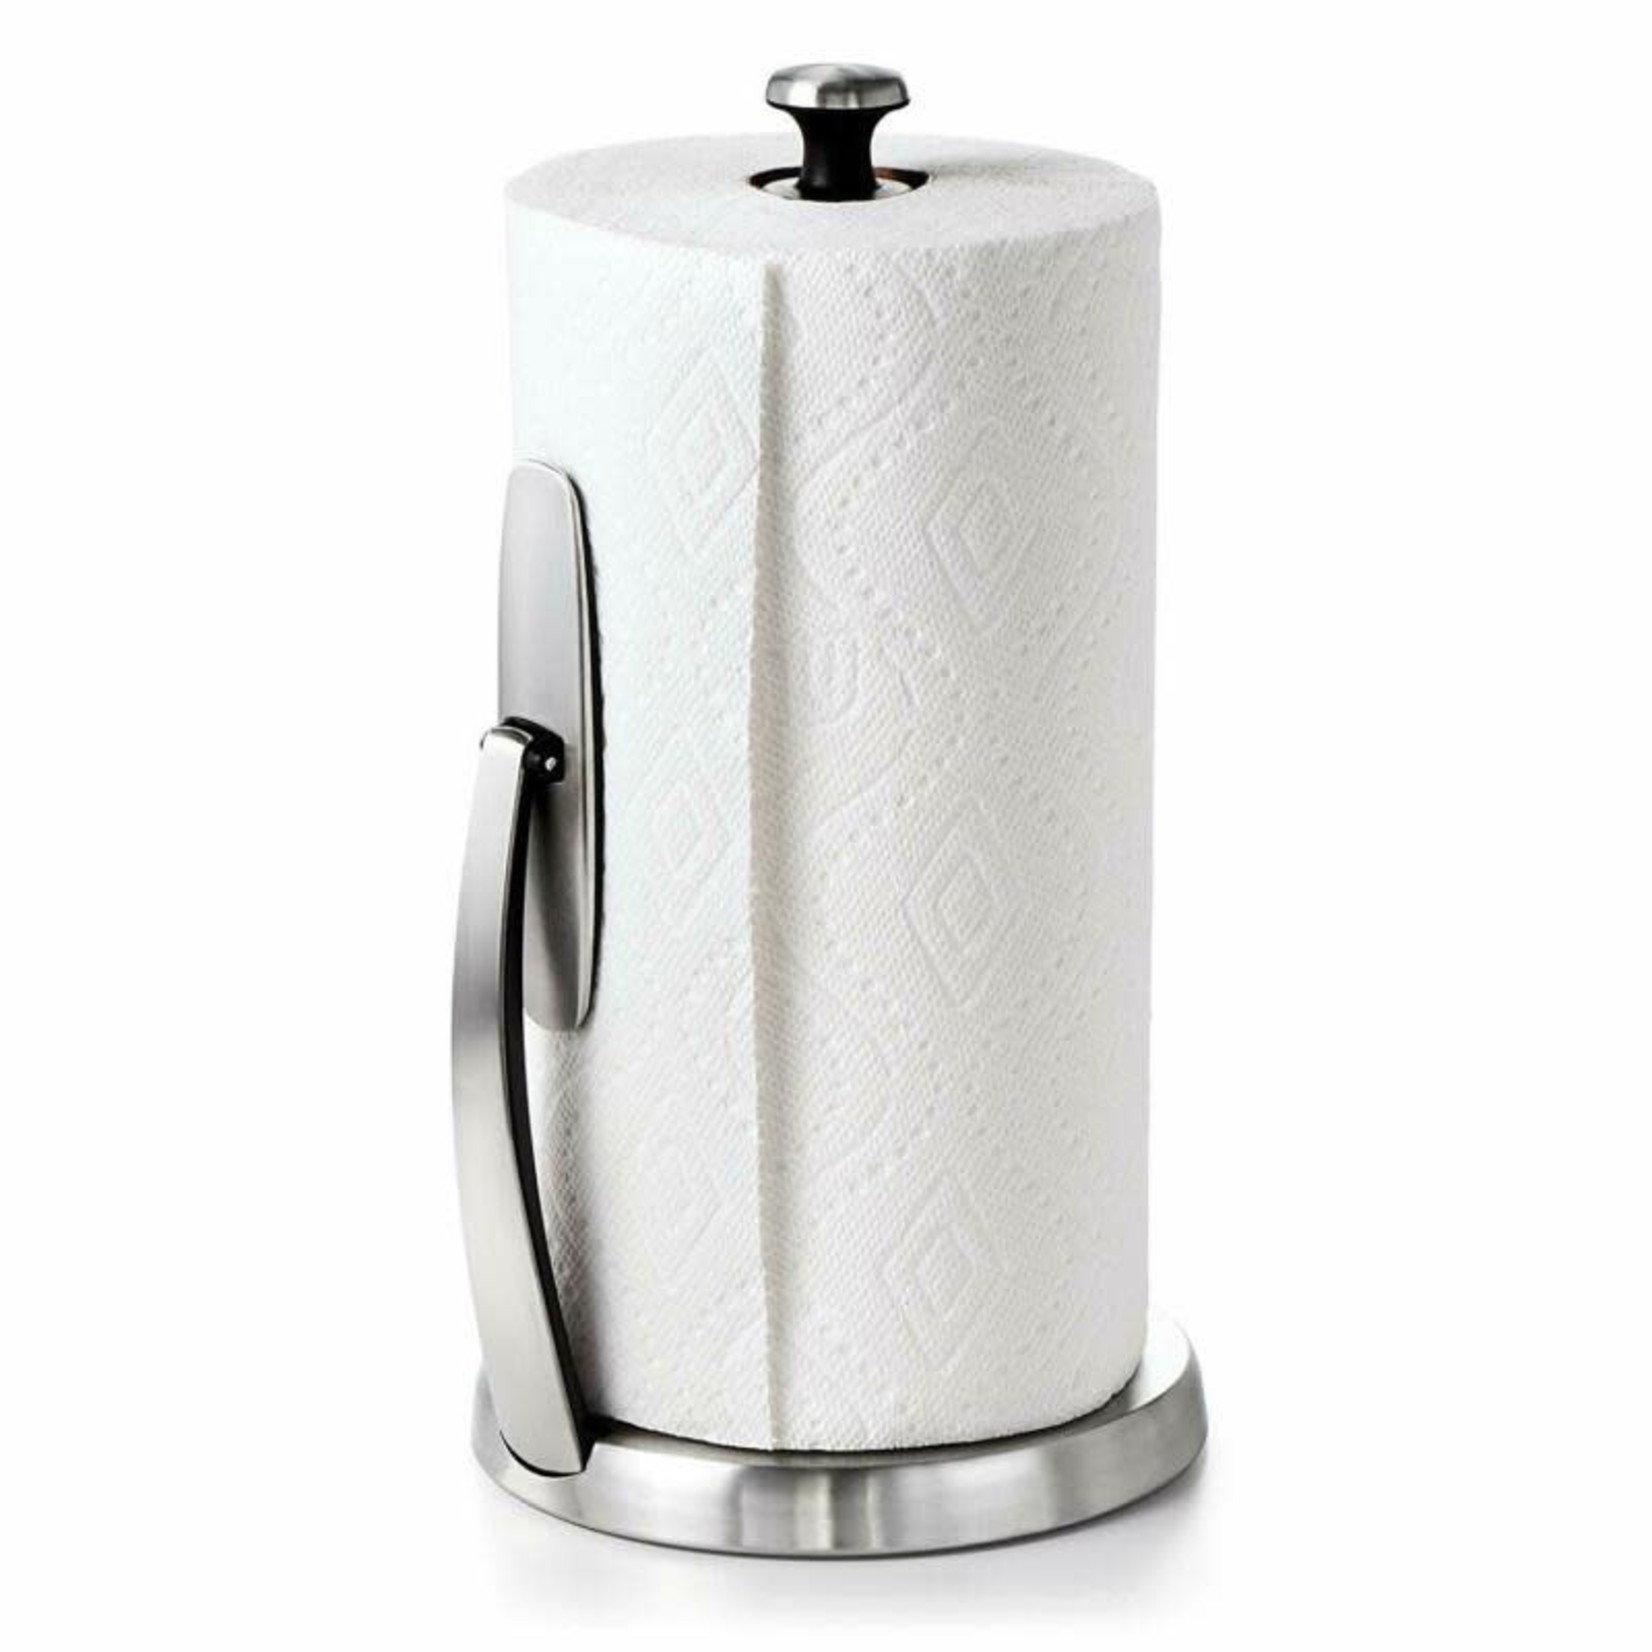 https://cdn.shoplightspeed.com/shops/627977/files/41104020/1652x1652x2/oxo-oxo-good-grips-simplytear-standing-paper-towel.jpg